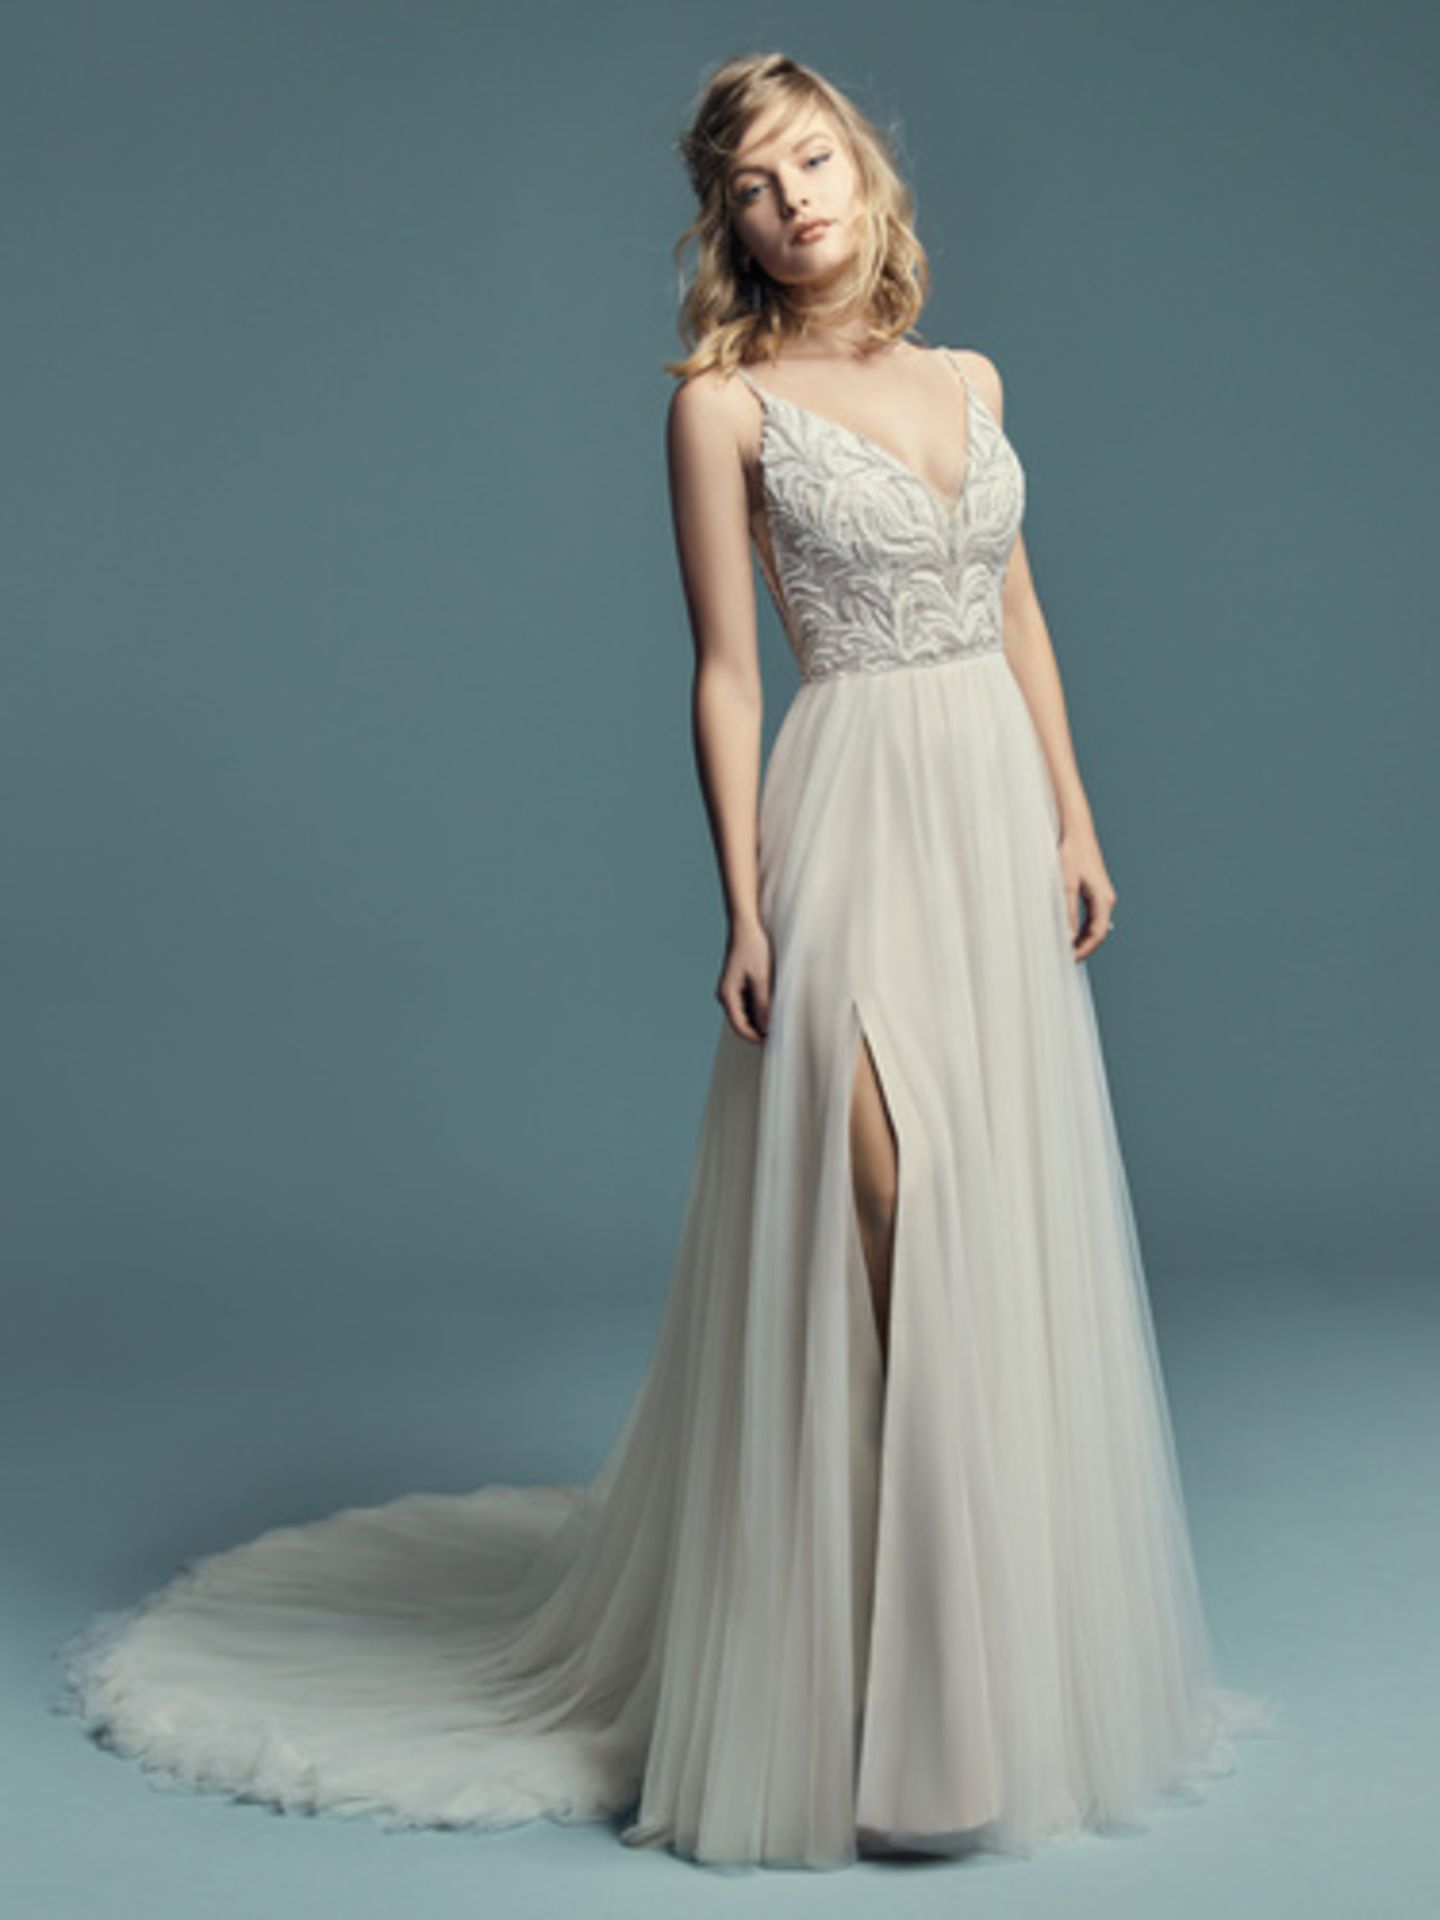 1 x MAGGIE SOTTERO 'Charlene' Boho-Style Aline Designer Wedding Dress Bridal Gown - RRP £1,900 - Image 9 of 15